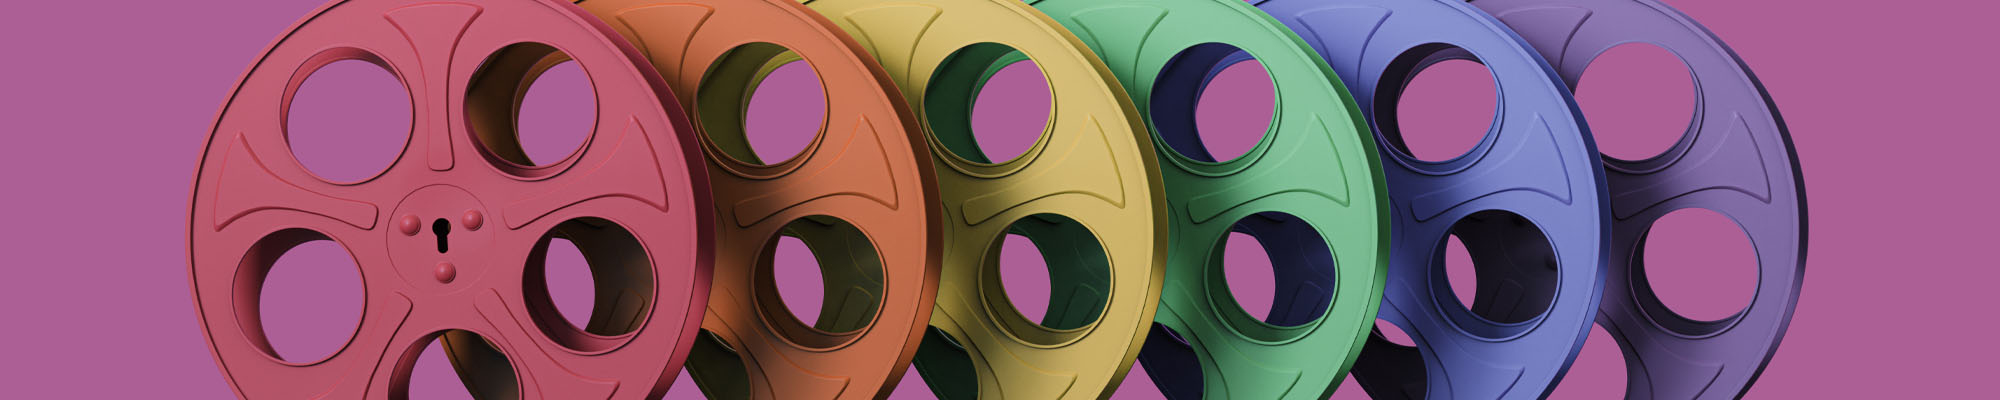 rainbow colored film reels